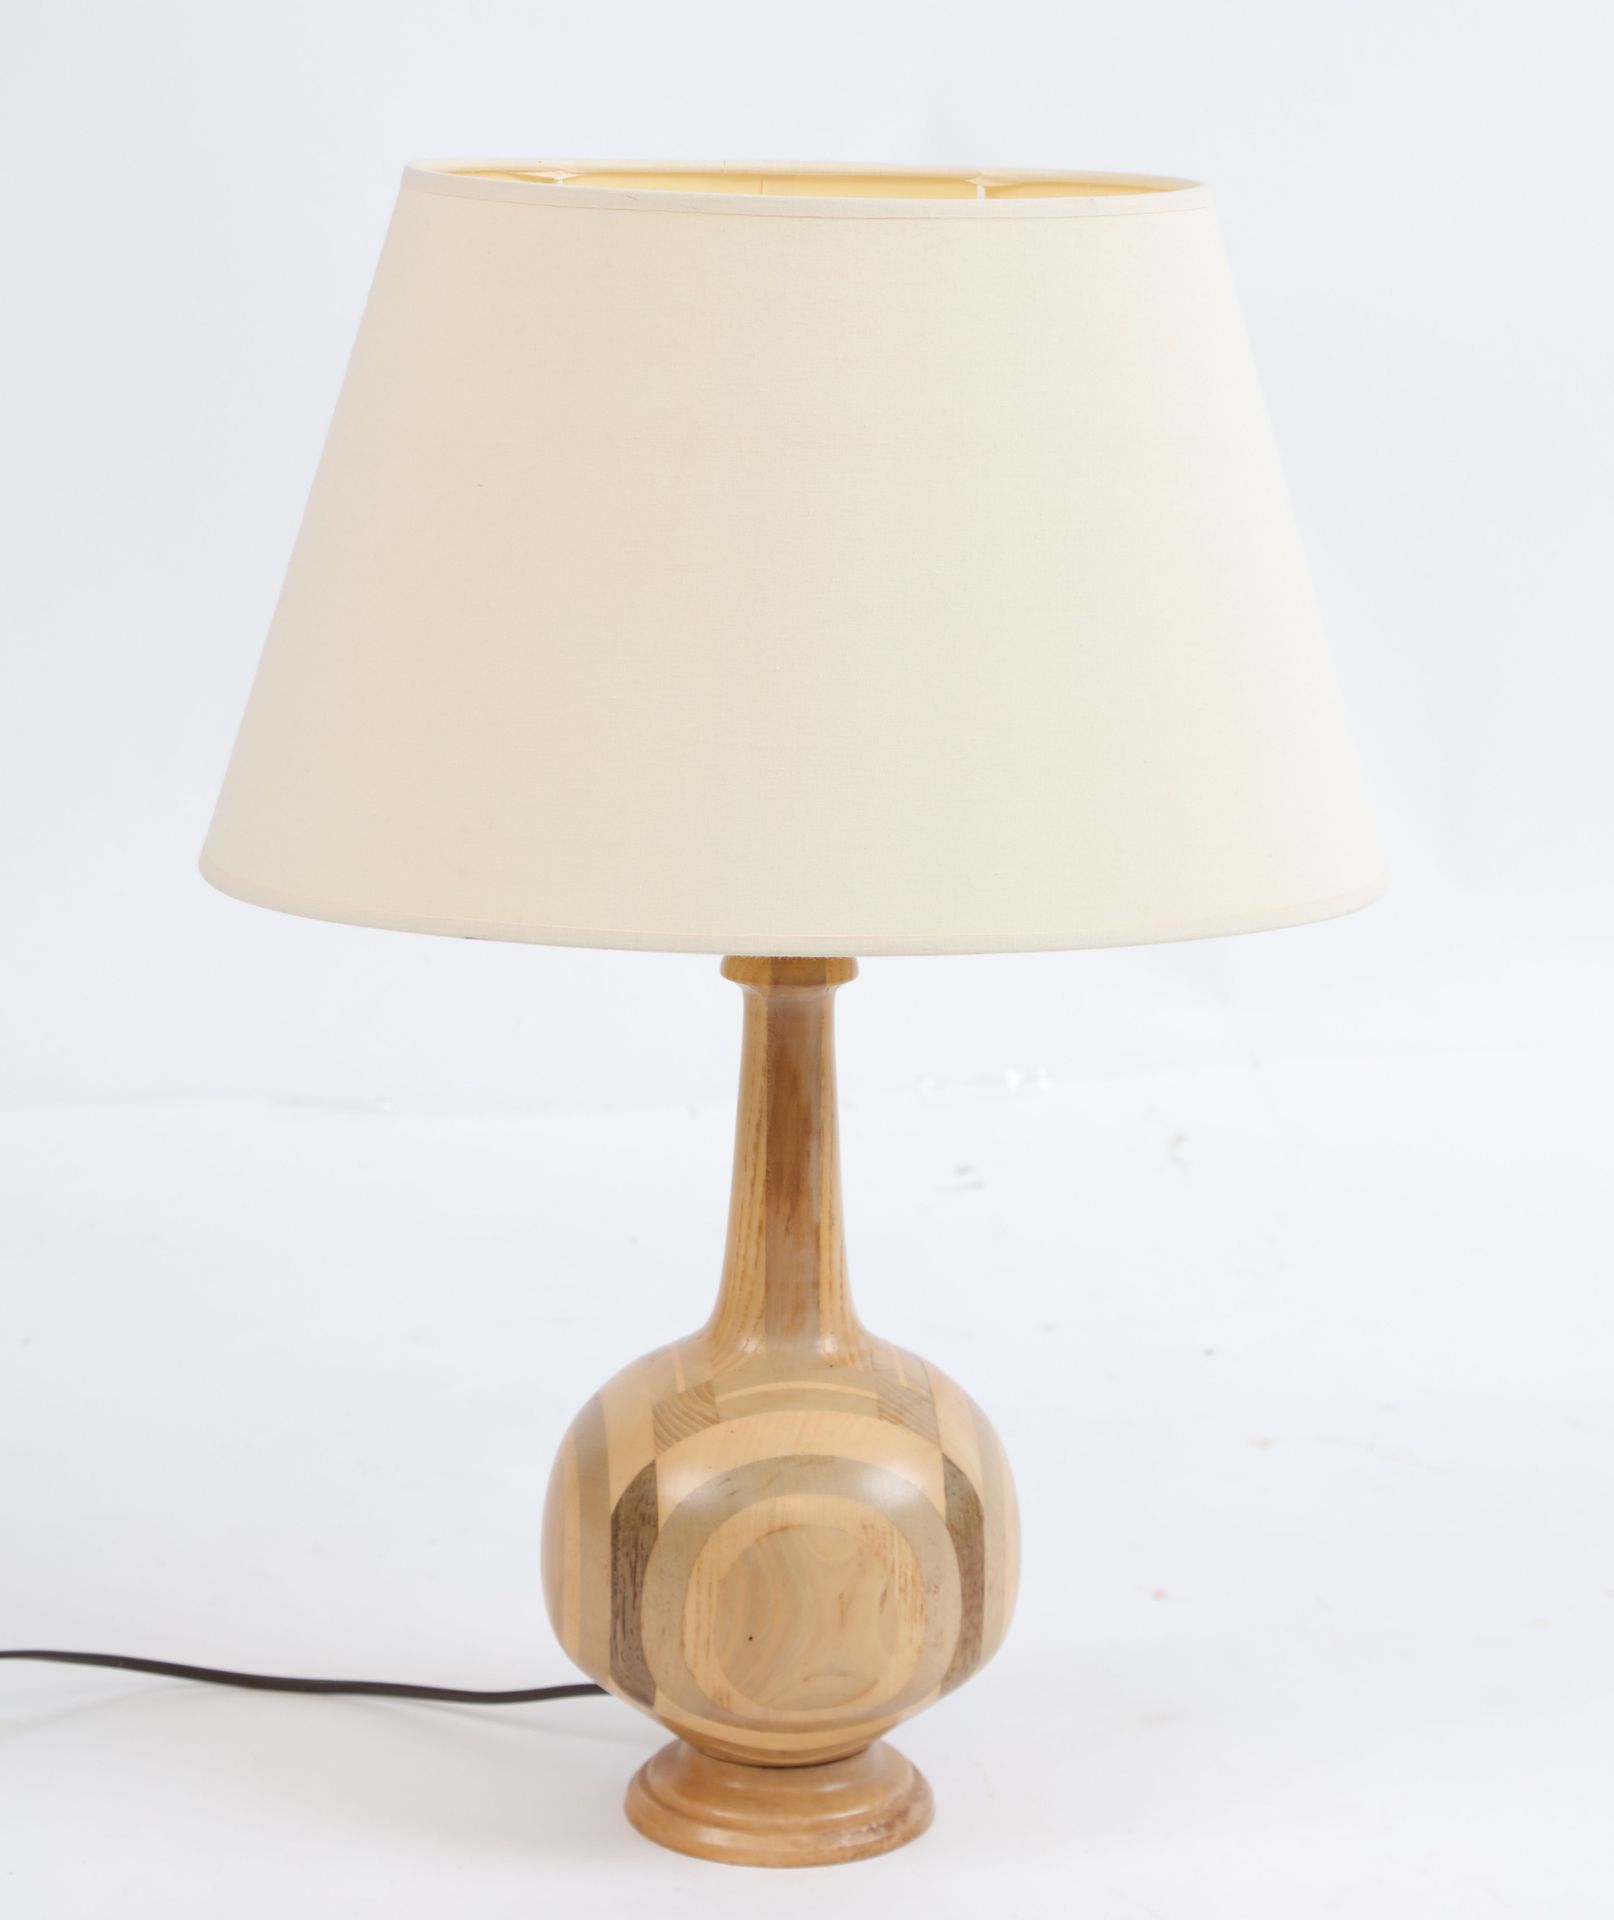 Null Lámpara de madera natural (varias especies de madera). Altura : 48 cm.